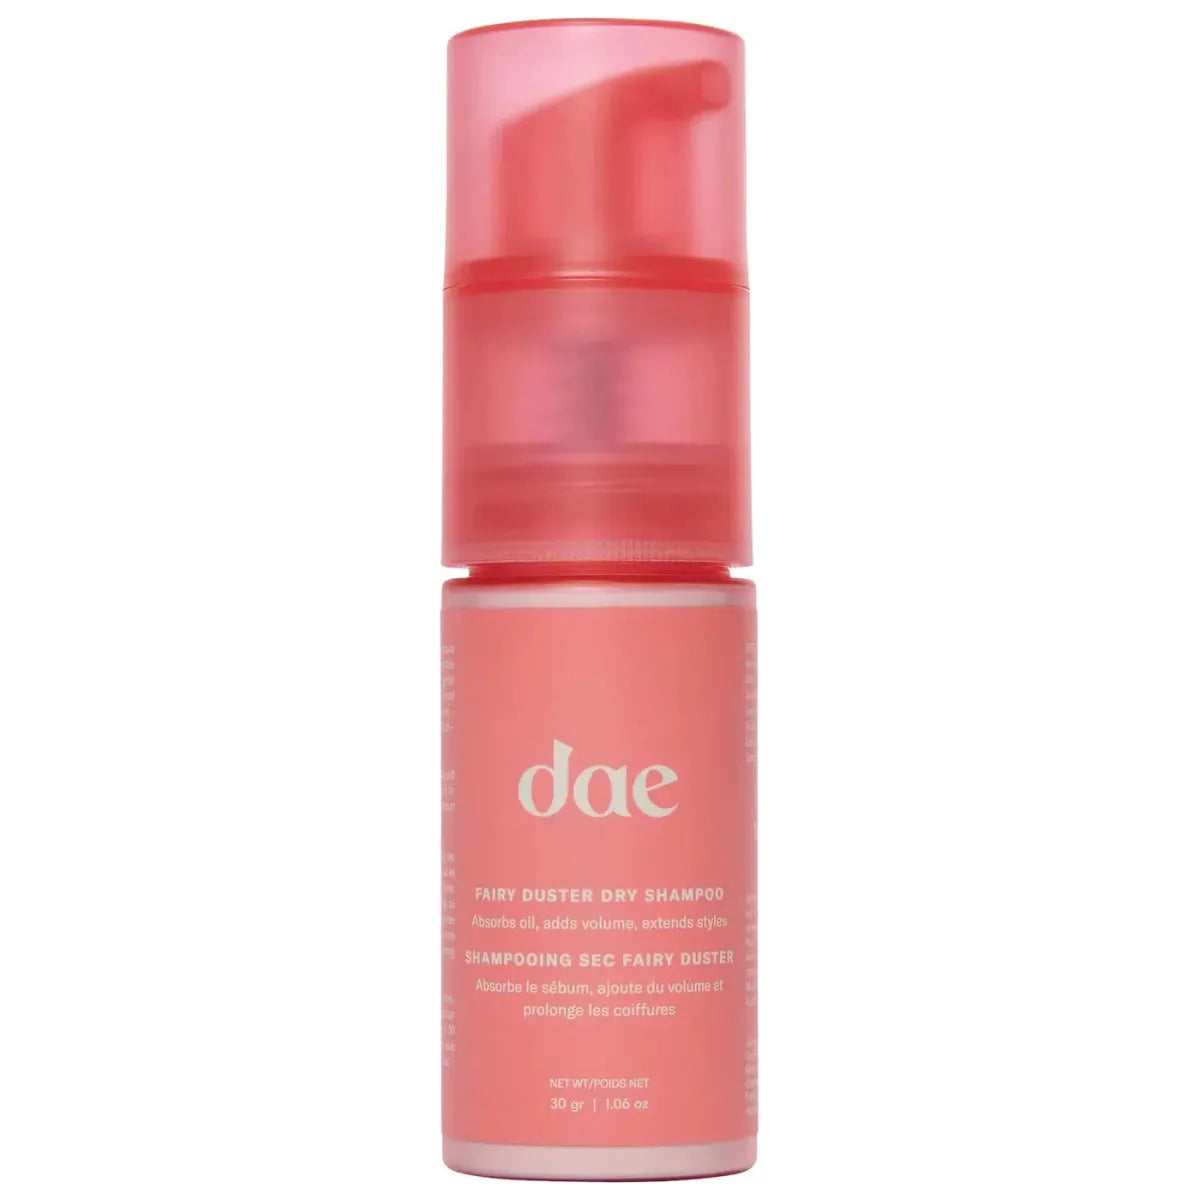 dae Fairy Duster Volumizing Dry Shampoo Powder - 30g - Glam Global UK